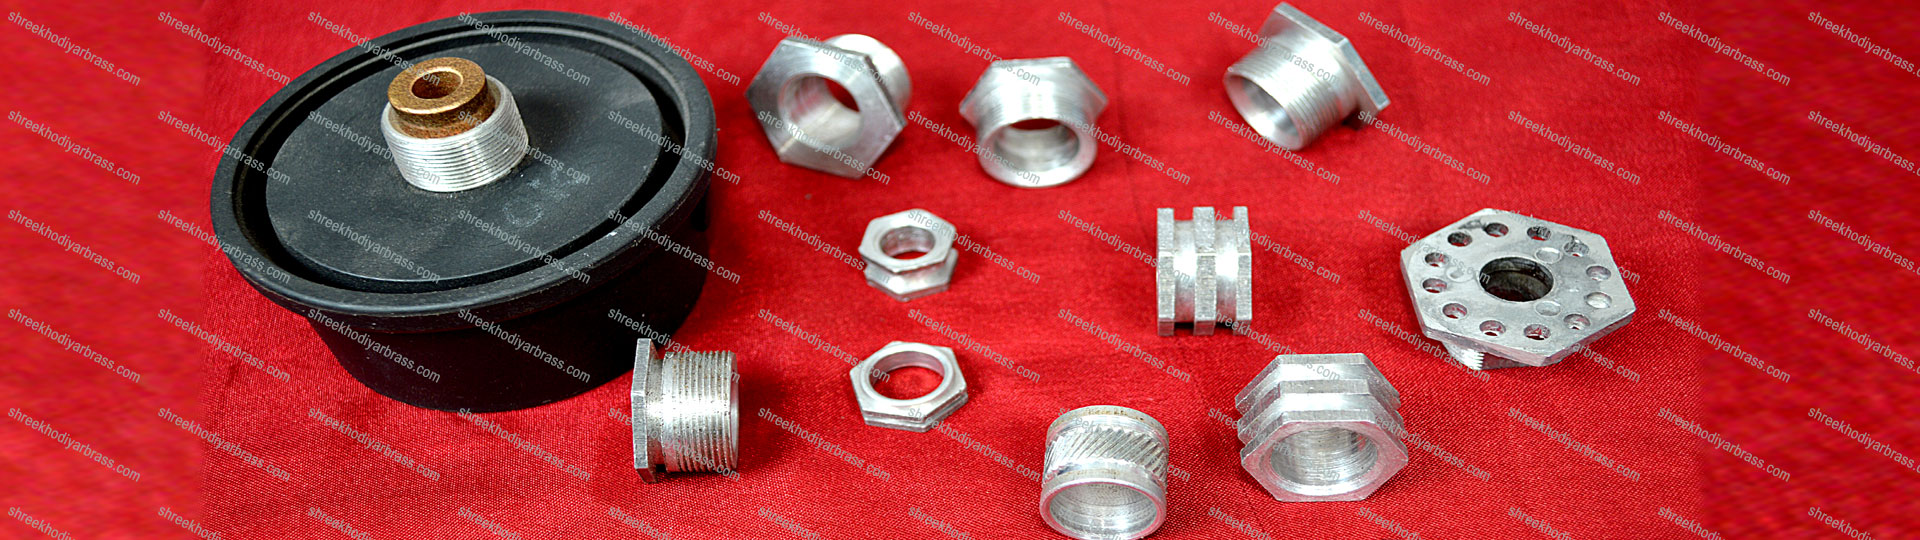 Aluminium Brass Mixer Grinder Parts Aluminium Hex Nut, Aluminium Square Nut, Aluminium Bend Ferrule, Aluminium Sensor Nut and Part